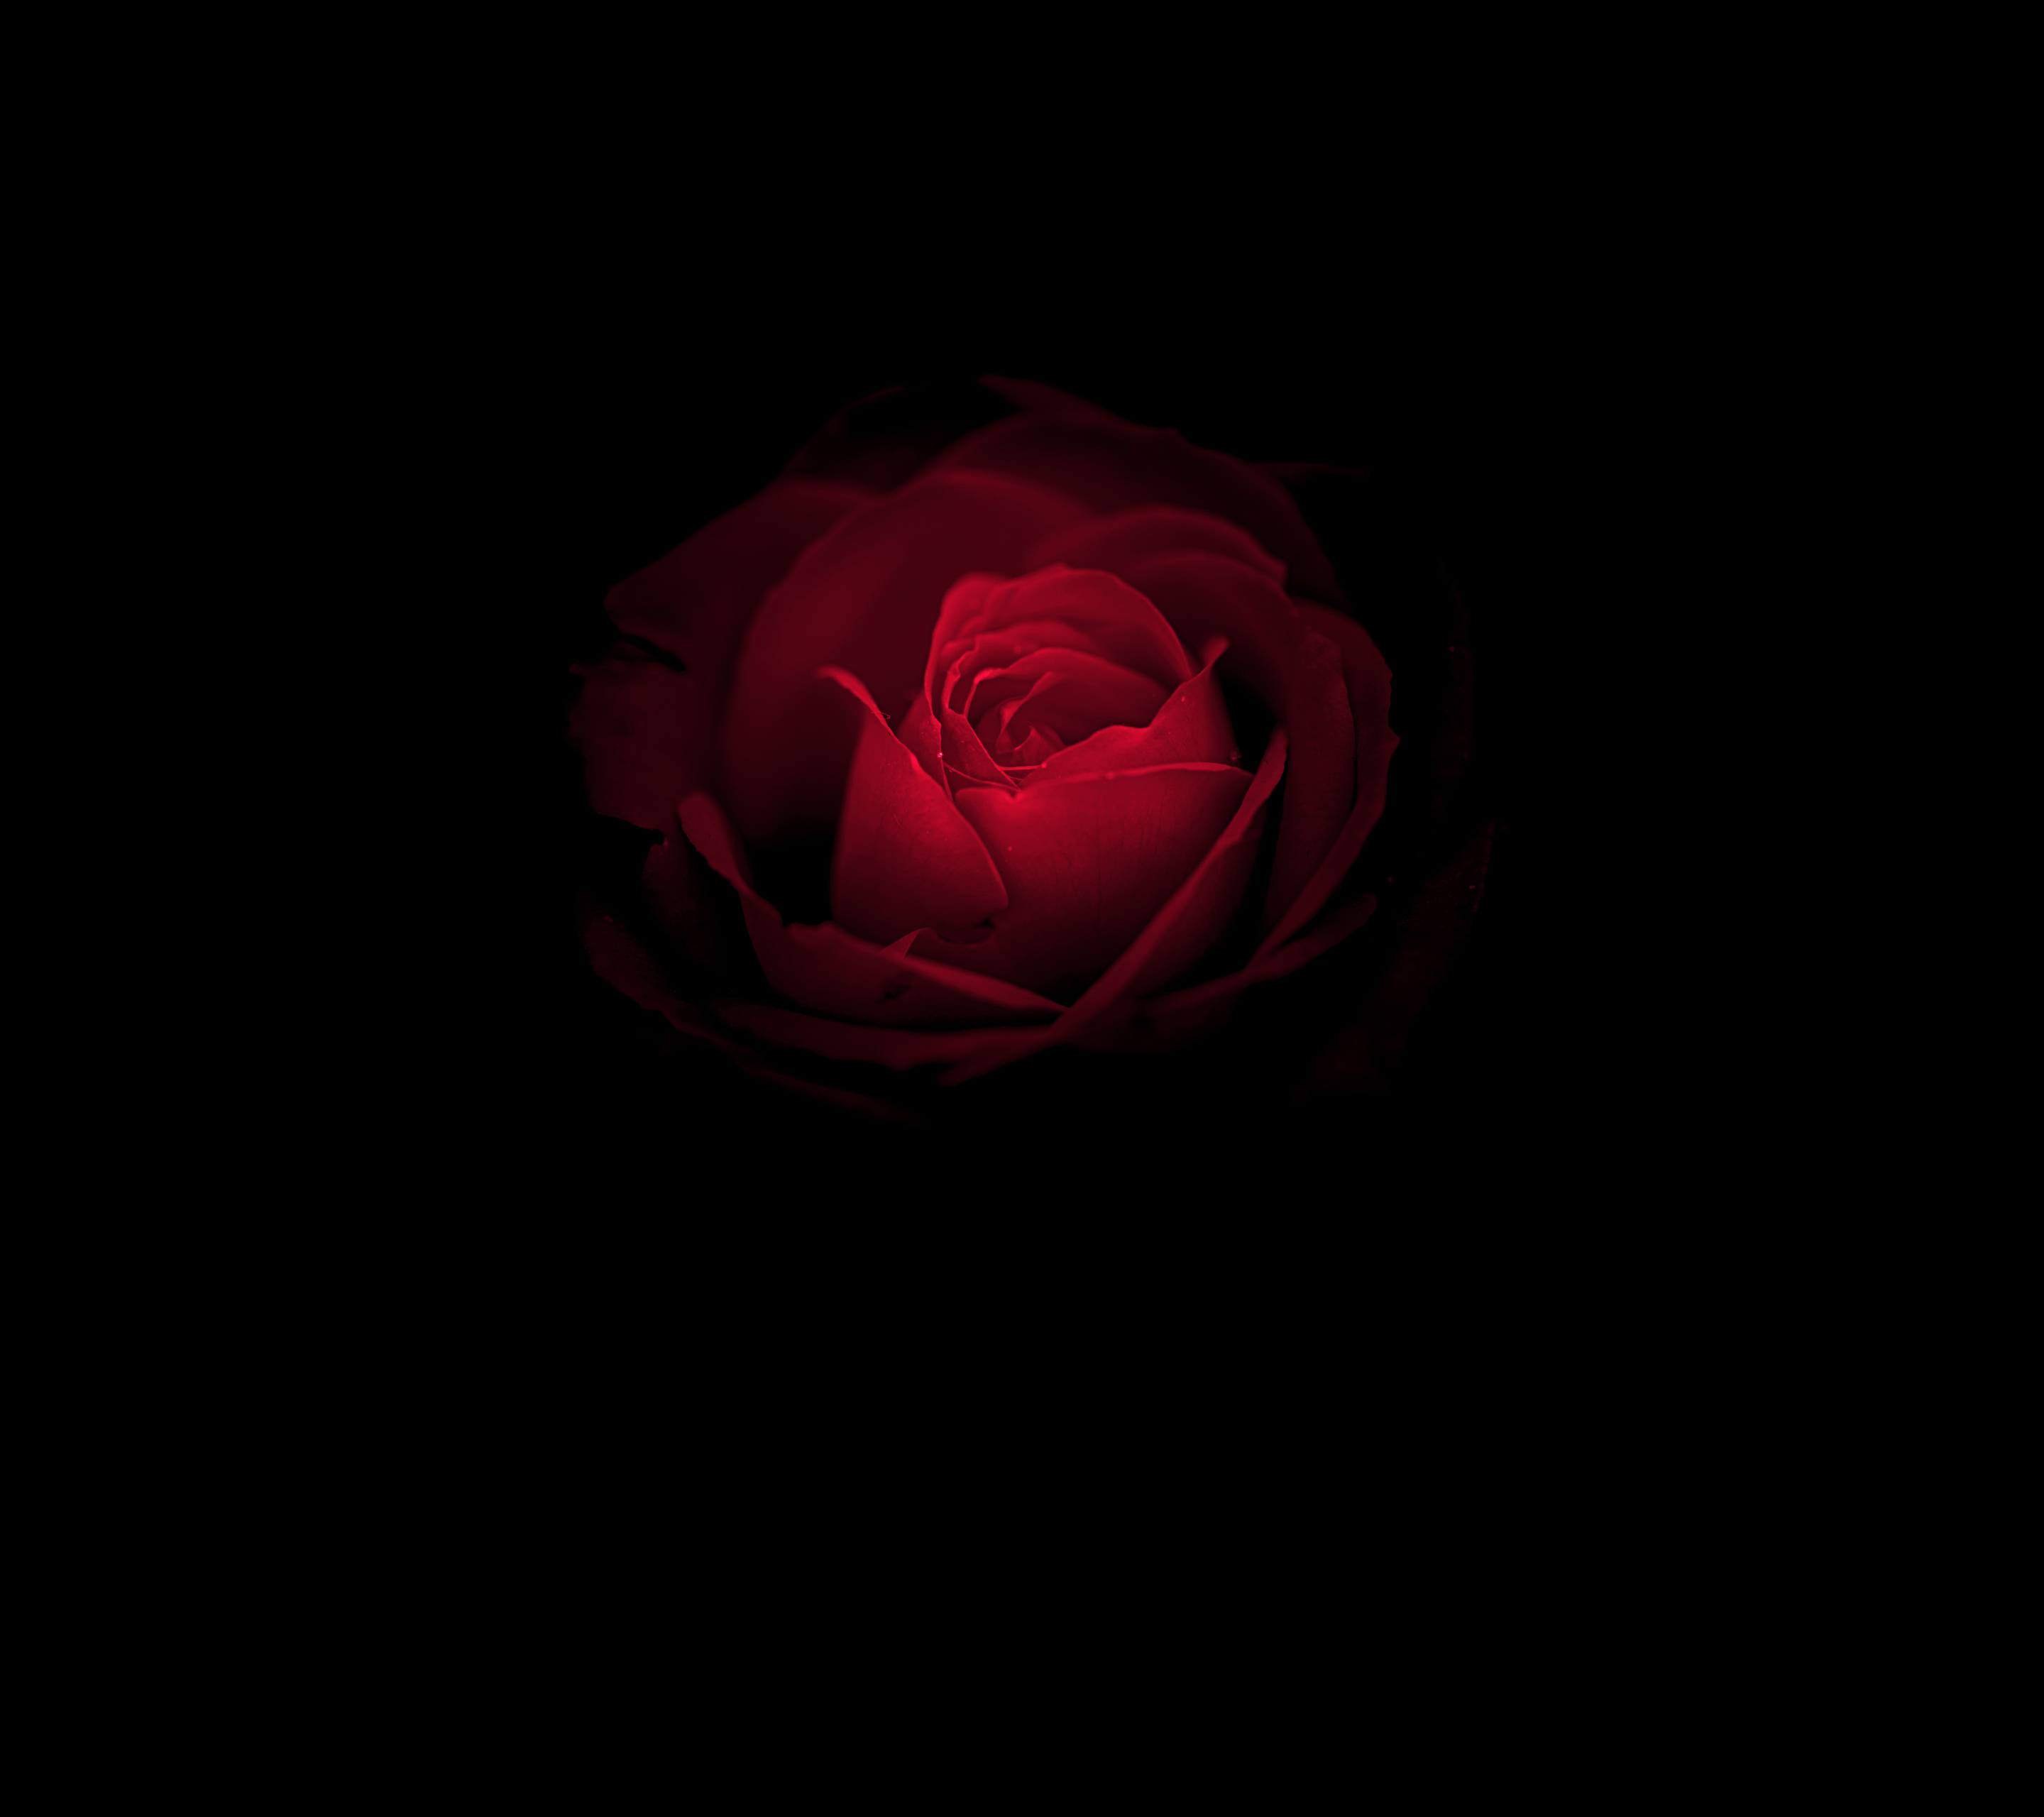 Black Flowers Wallpaper For Android.org. Black flowers wallpaper, Red roses, Android wallpaper